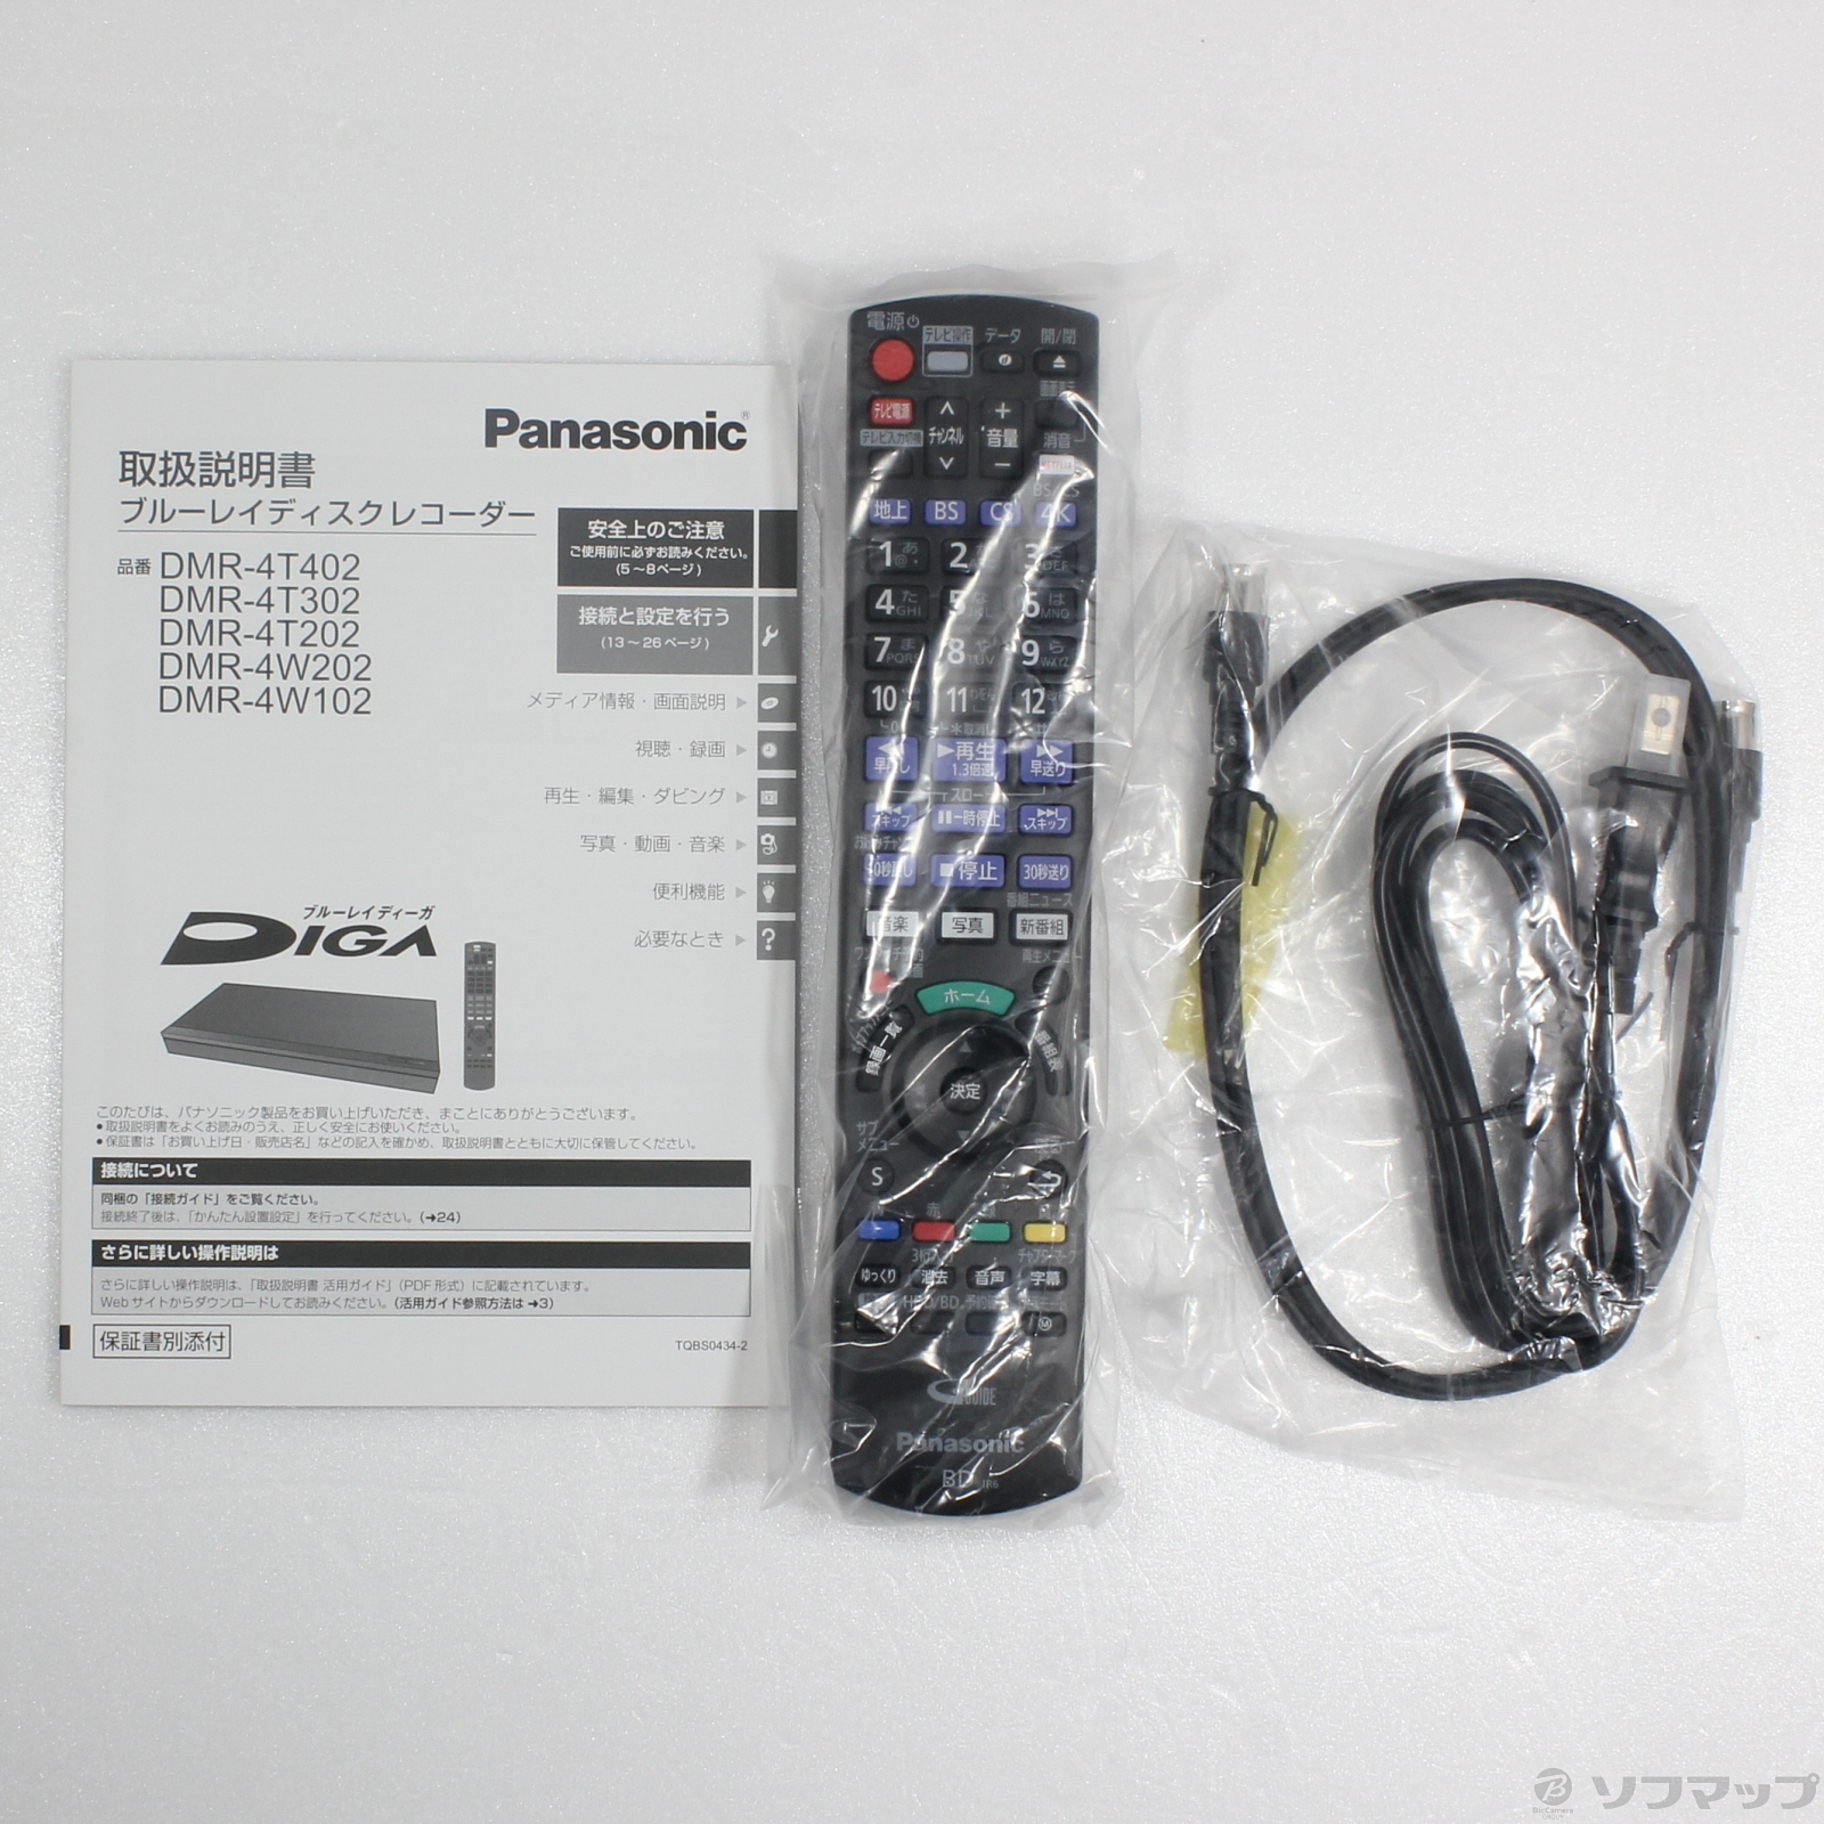 Panasonic DMR-4W202 BLACK